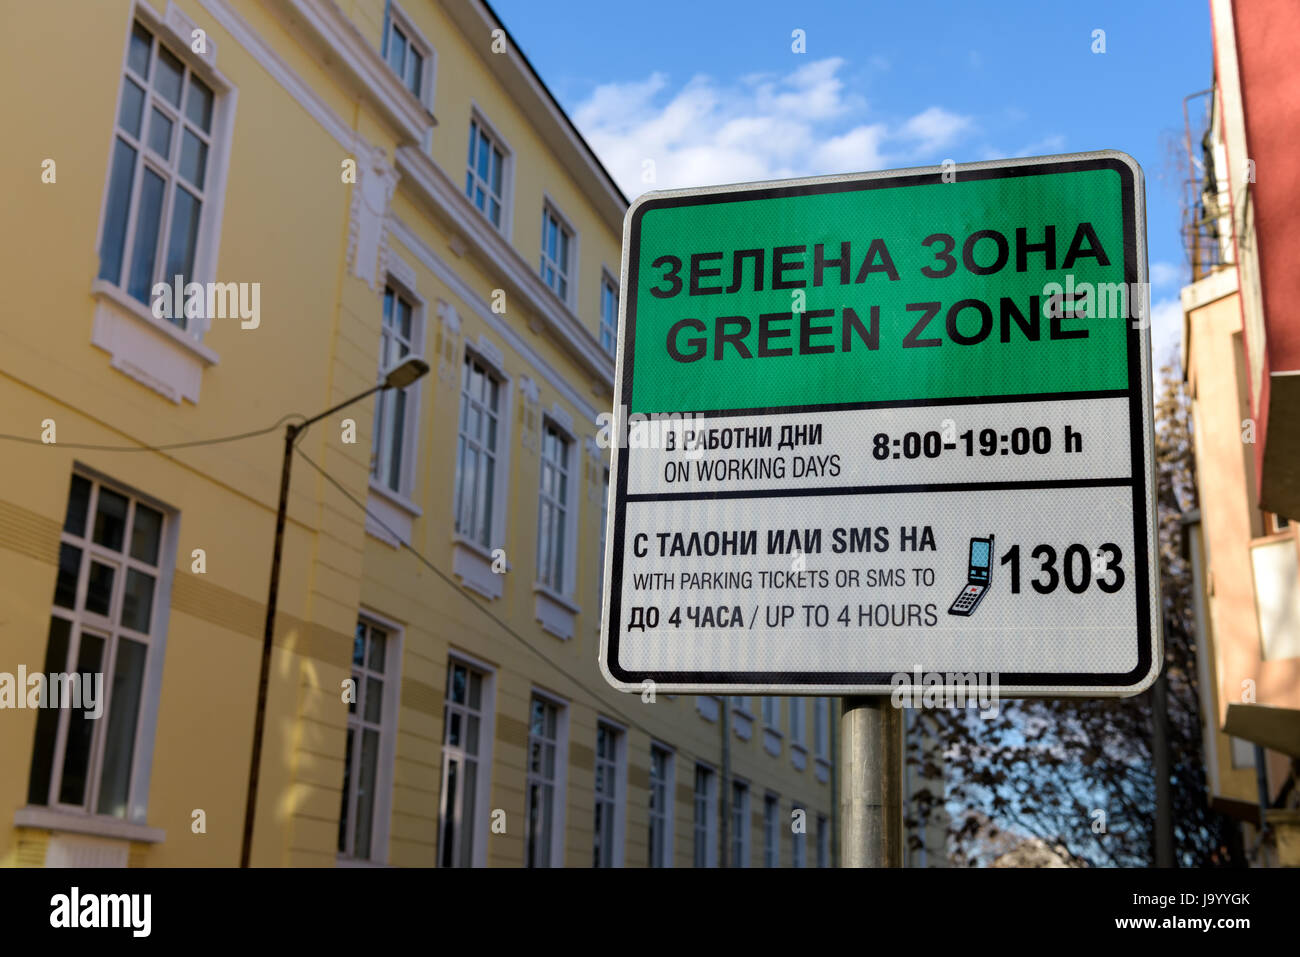 Road sign indicating green zone parking area, Sofia, Bulgaria Stock Photo